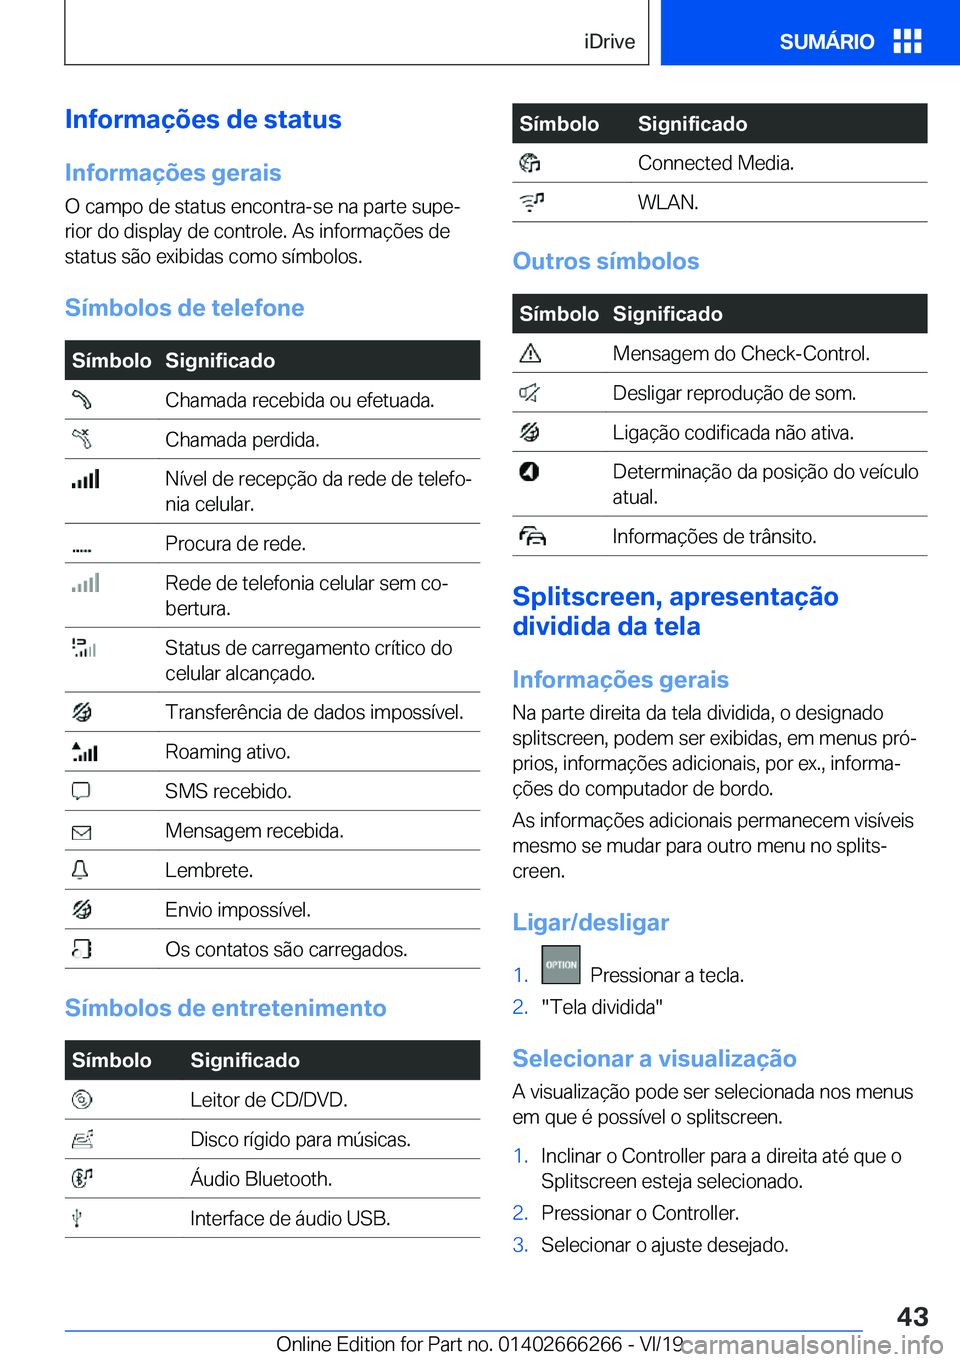 BMW 2 SERIES COUPE 2020  Manual do condutor (in Portuguese) �I�n�f�o�r�m�a�